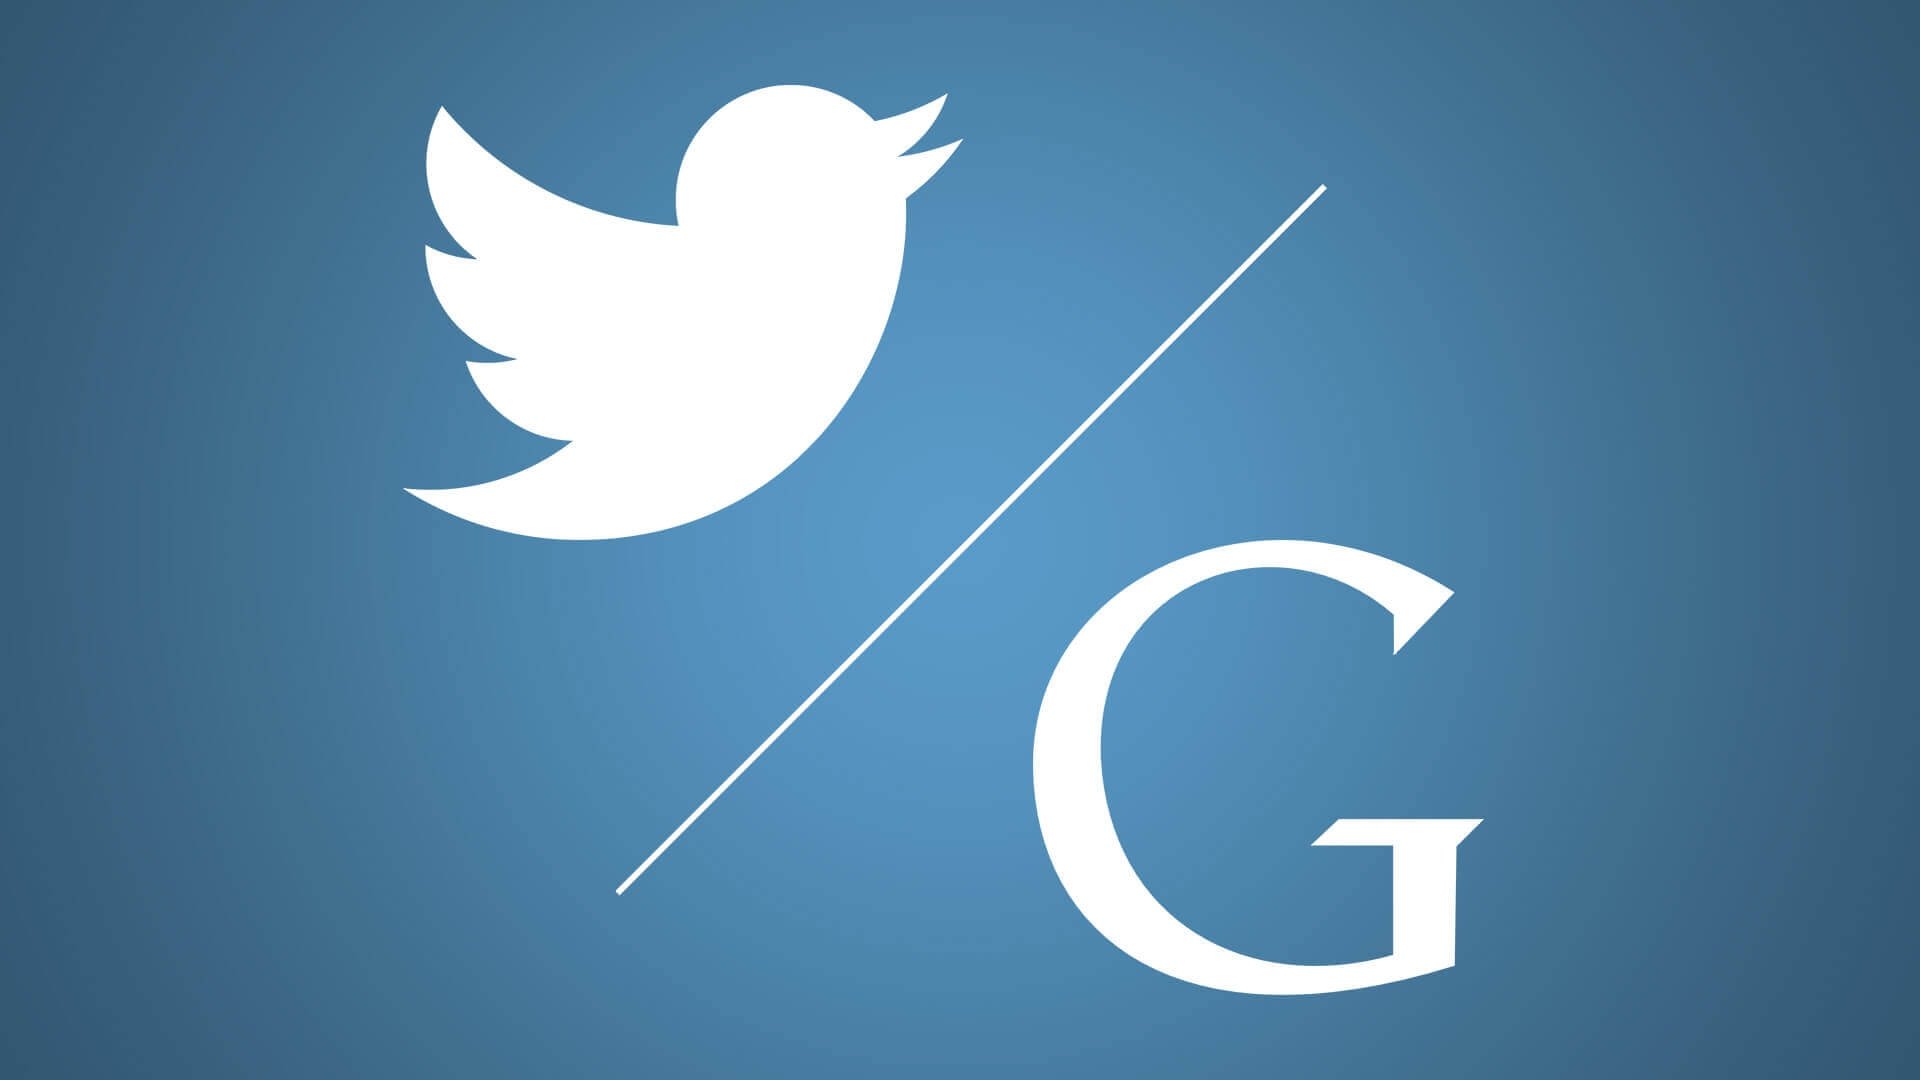 The Twitter & Google Uncertainty Principle